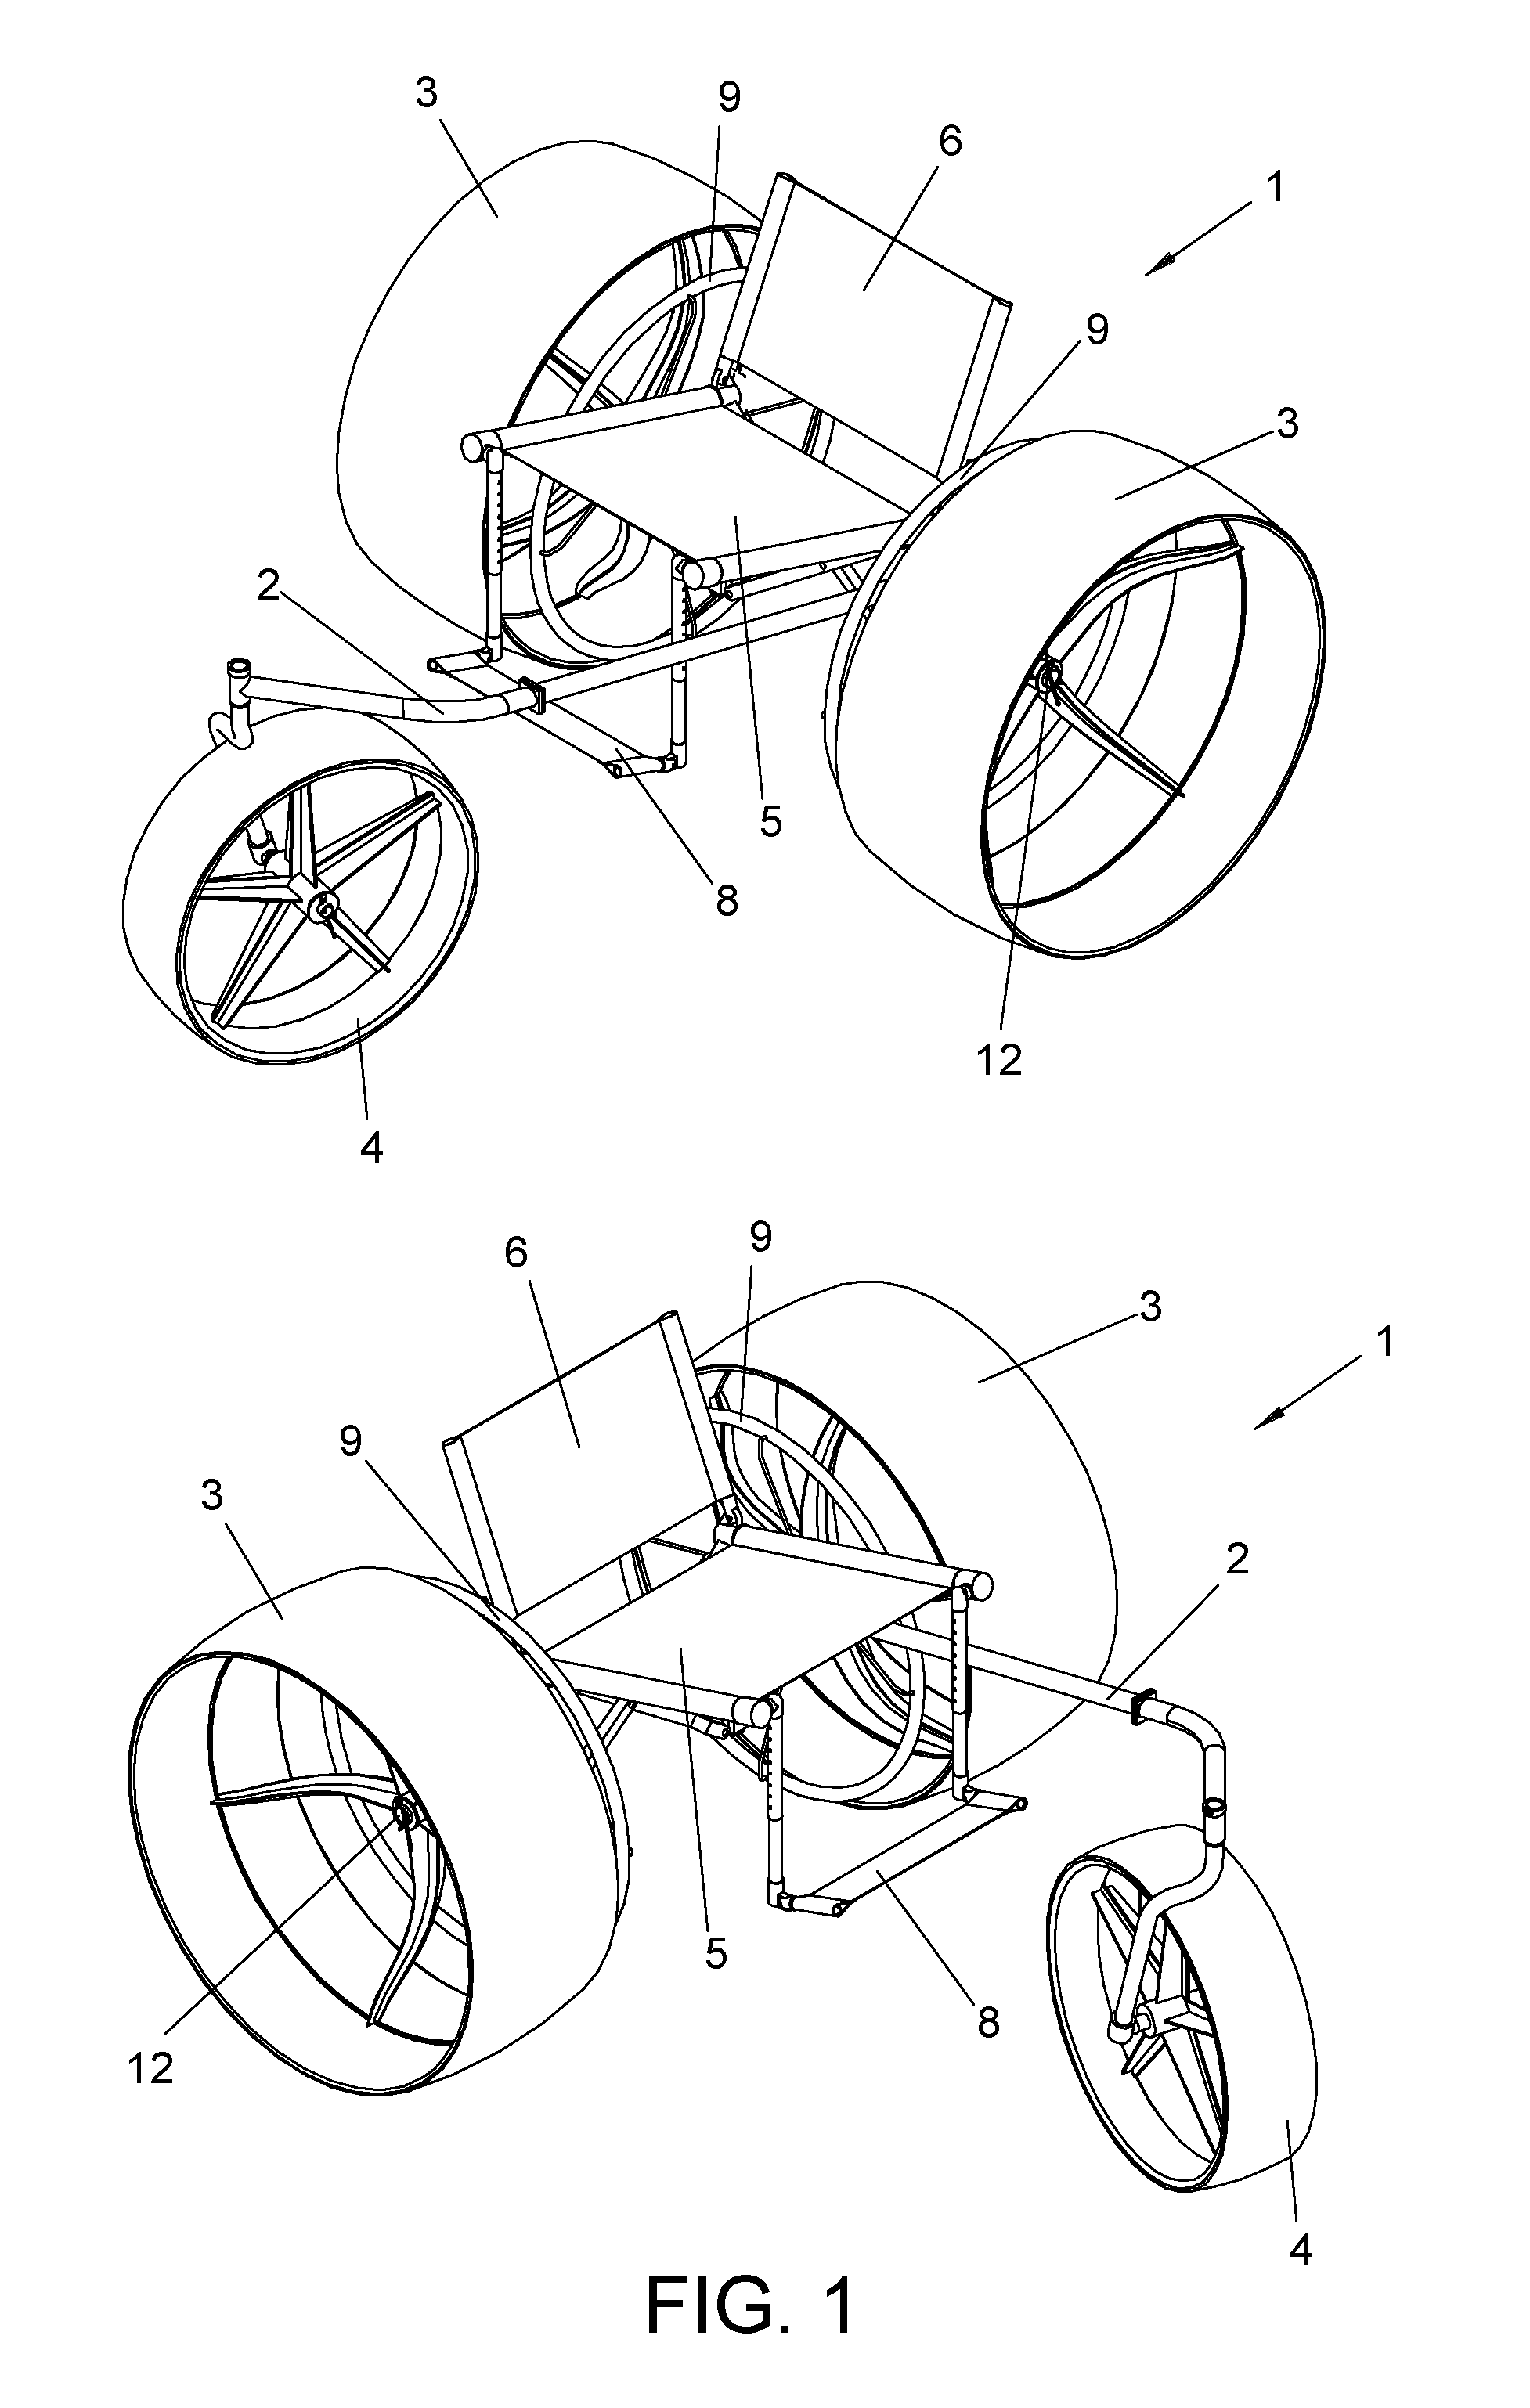 Folding wheelchair